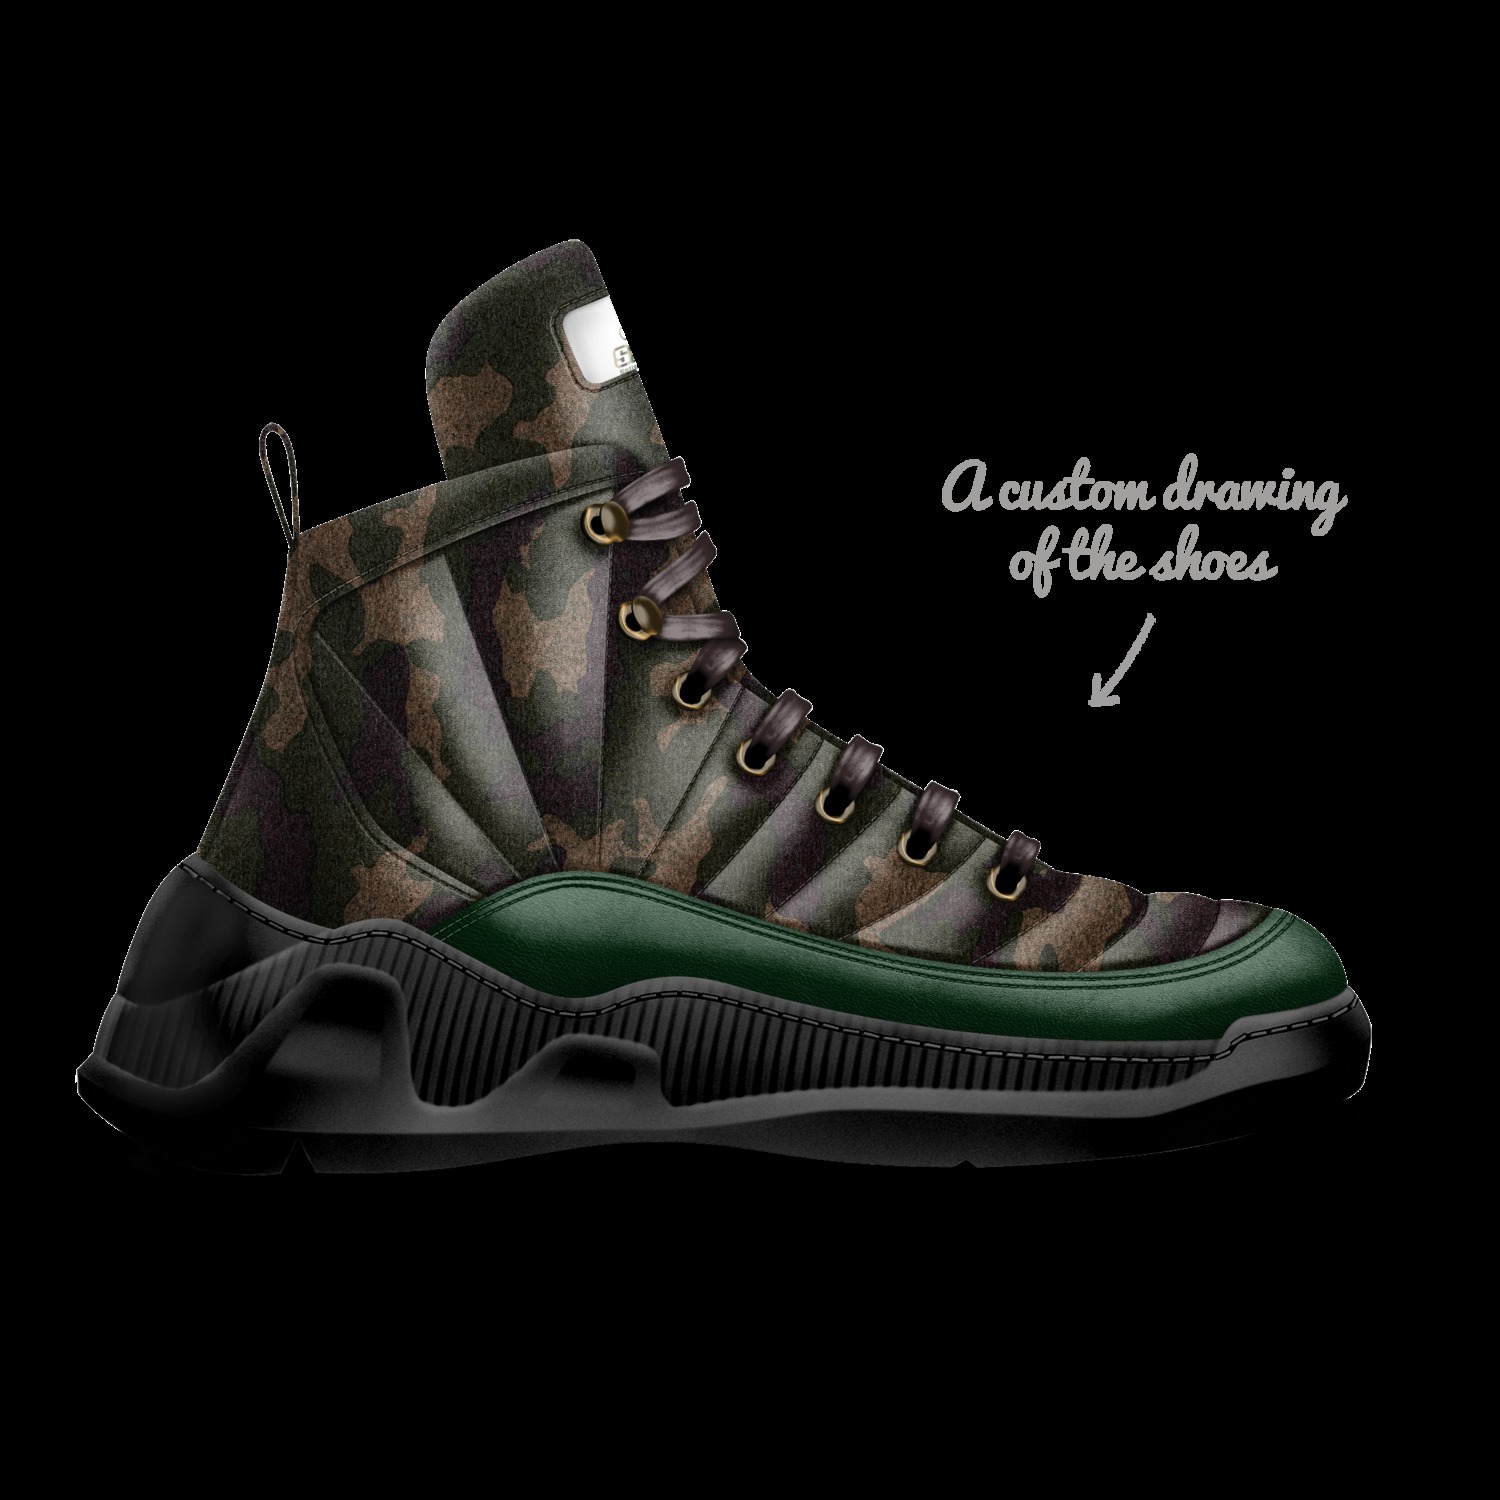 A Custom Shoe concept by Sbuig Llc